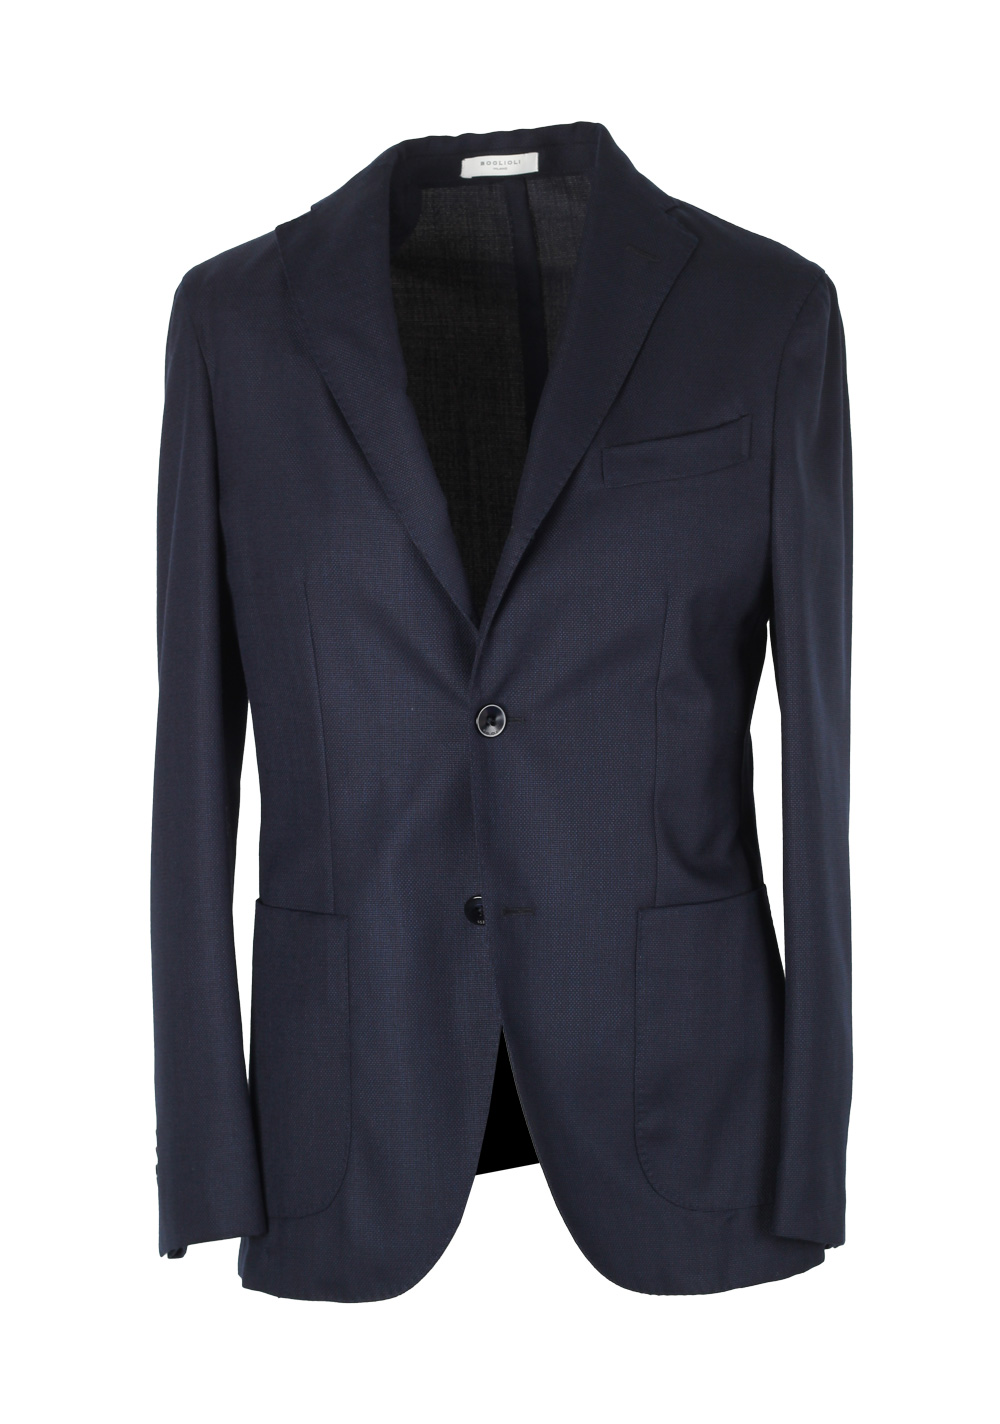 Boglioli K Jacket Blue Sport Coat Size 44 / 34R U.S. | Costume Limité